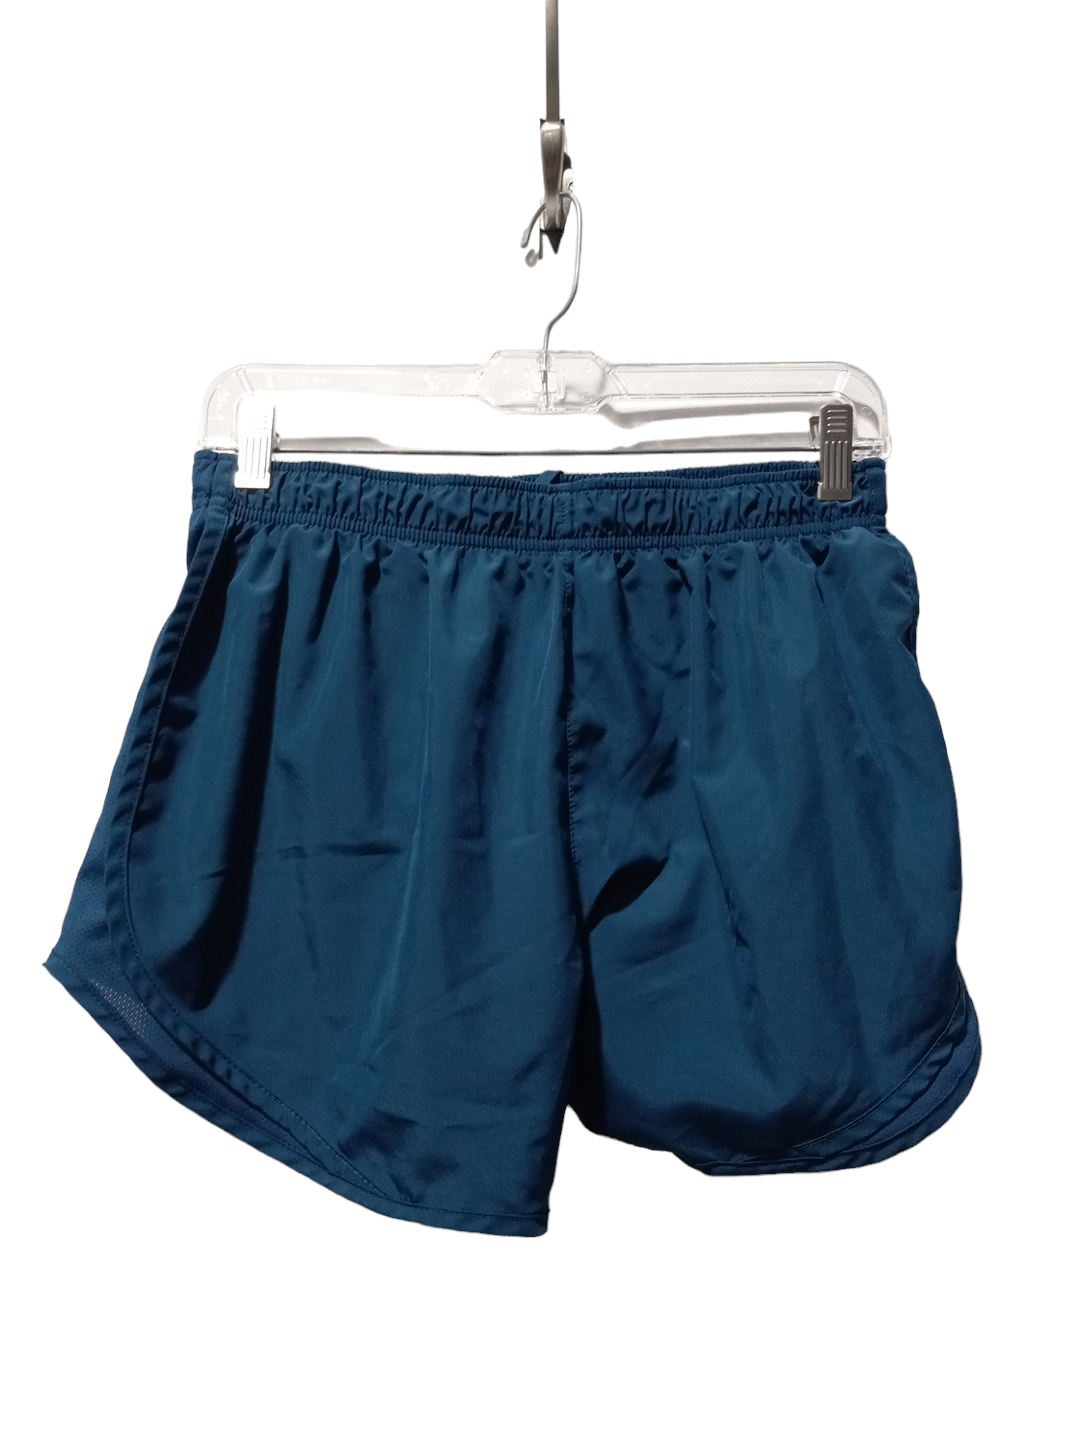 Blue Athletic Shorts Nike Apparel, Size M